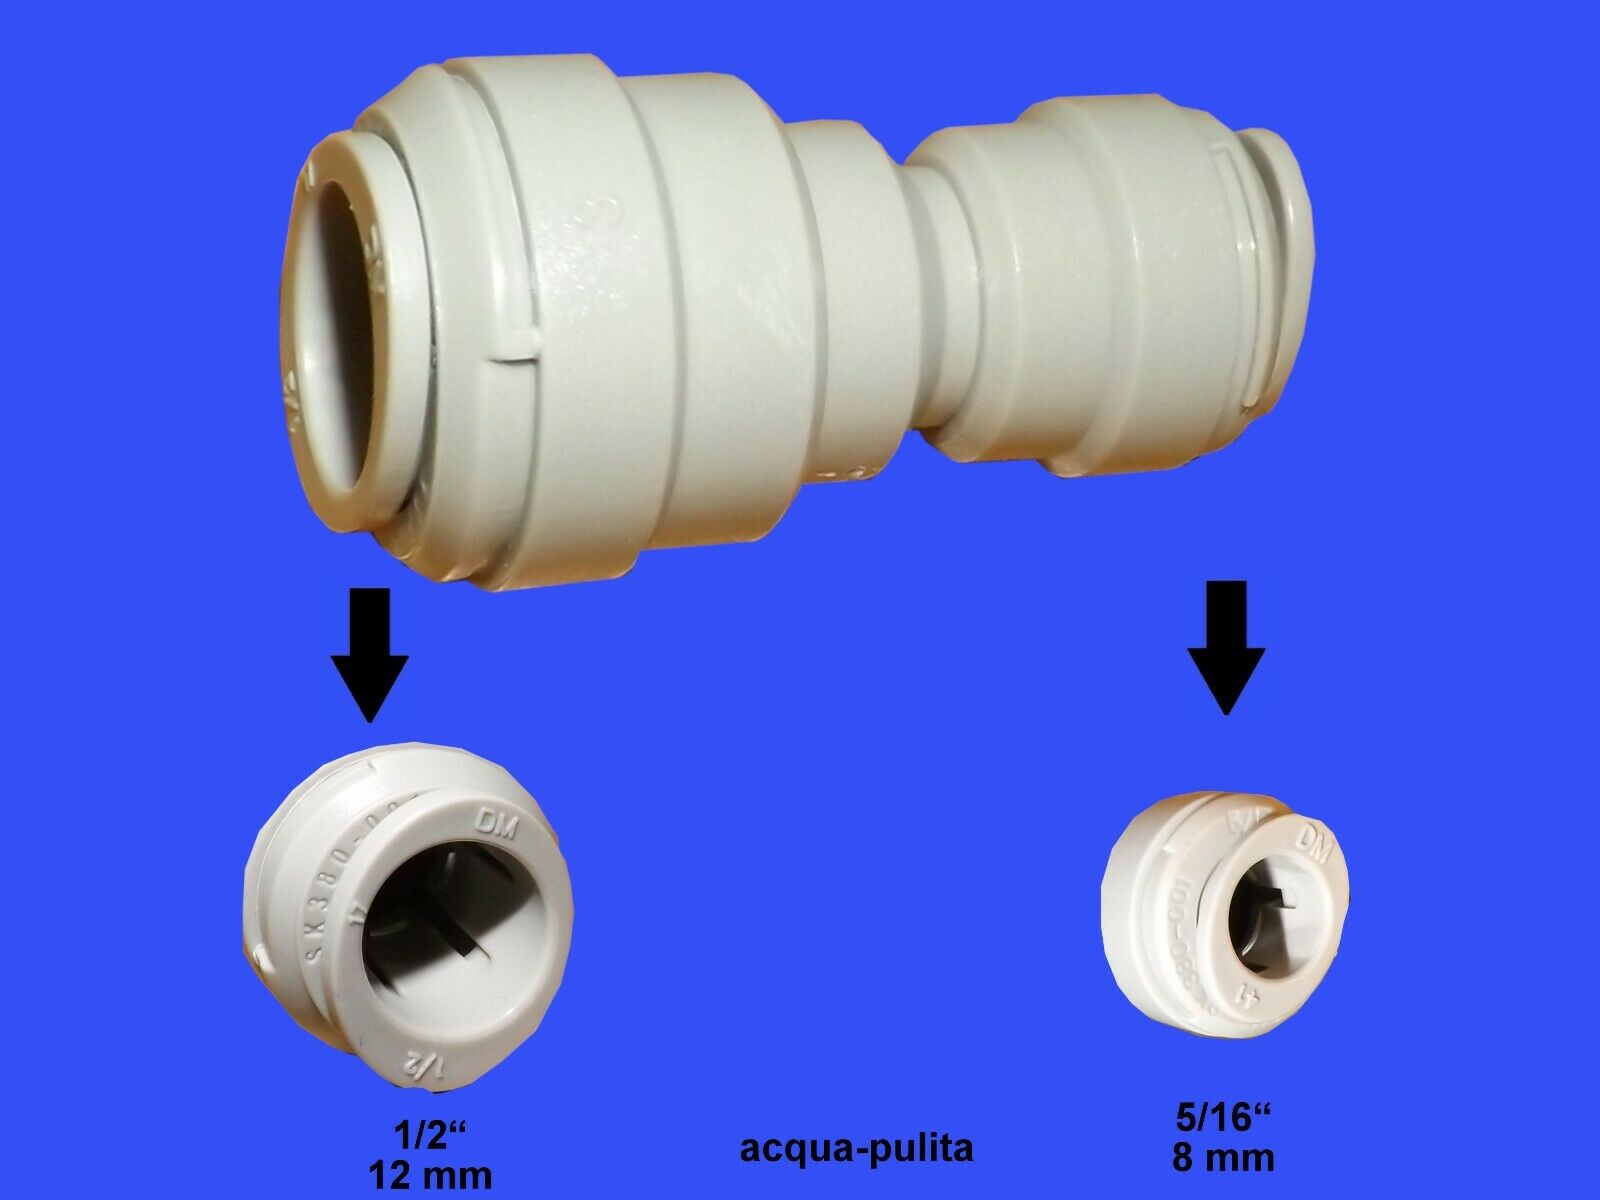 Riduzione 1/2"x5/16" (12mm x 8mm) innesto rapido per depuratore d'acqua